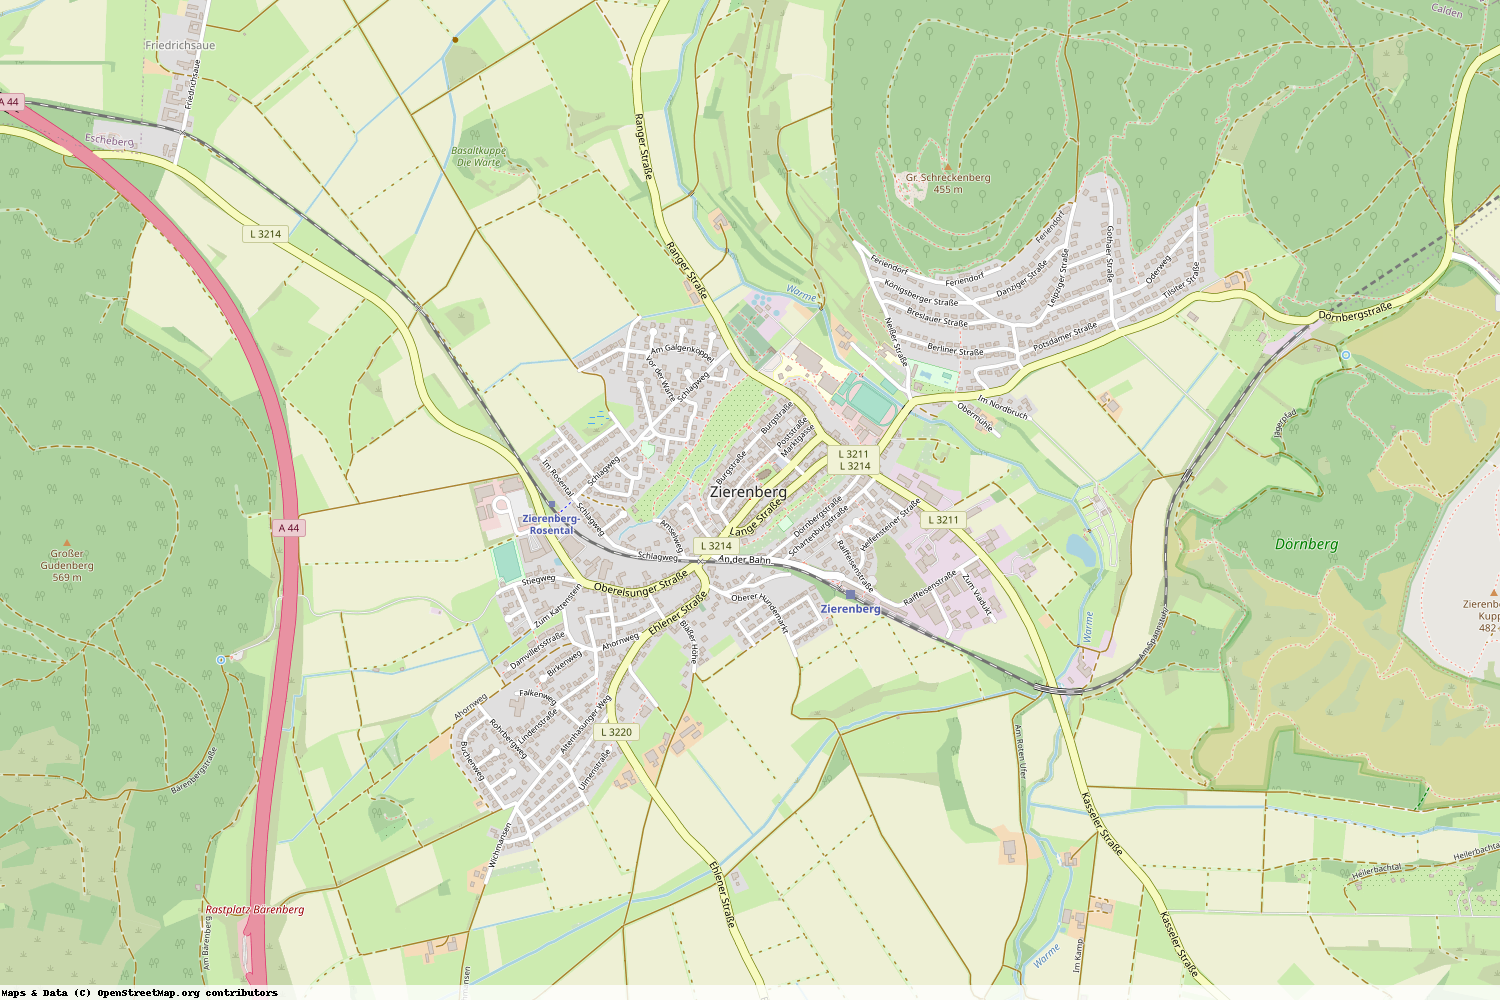 Ist gerade Stromausfall in Hessen - Kassel - Zierenberg?